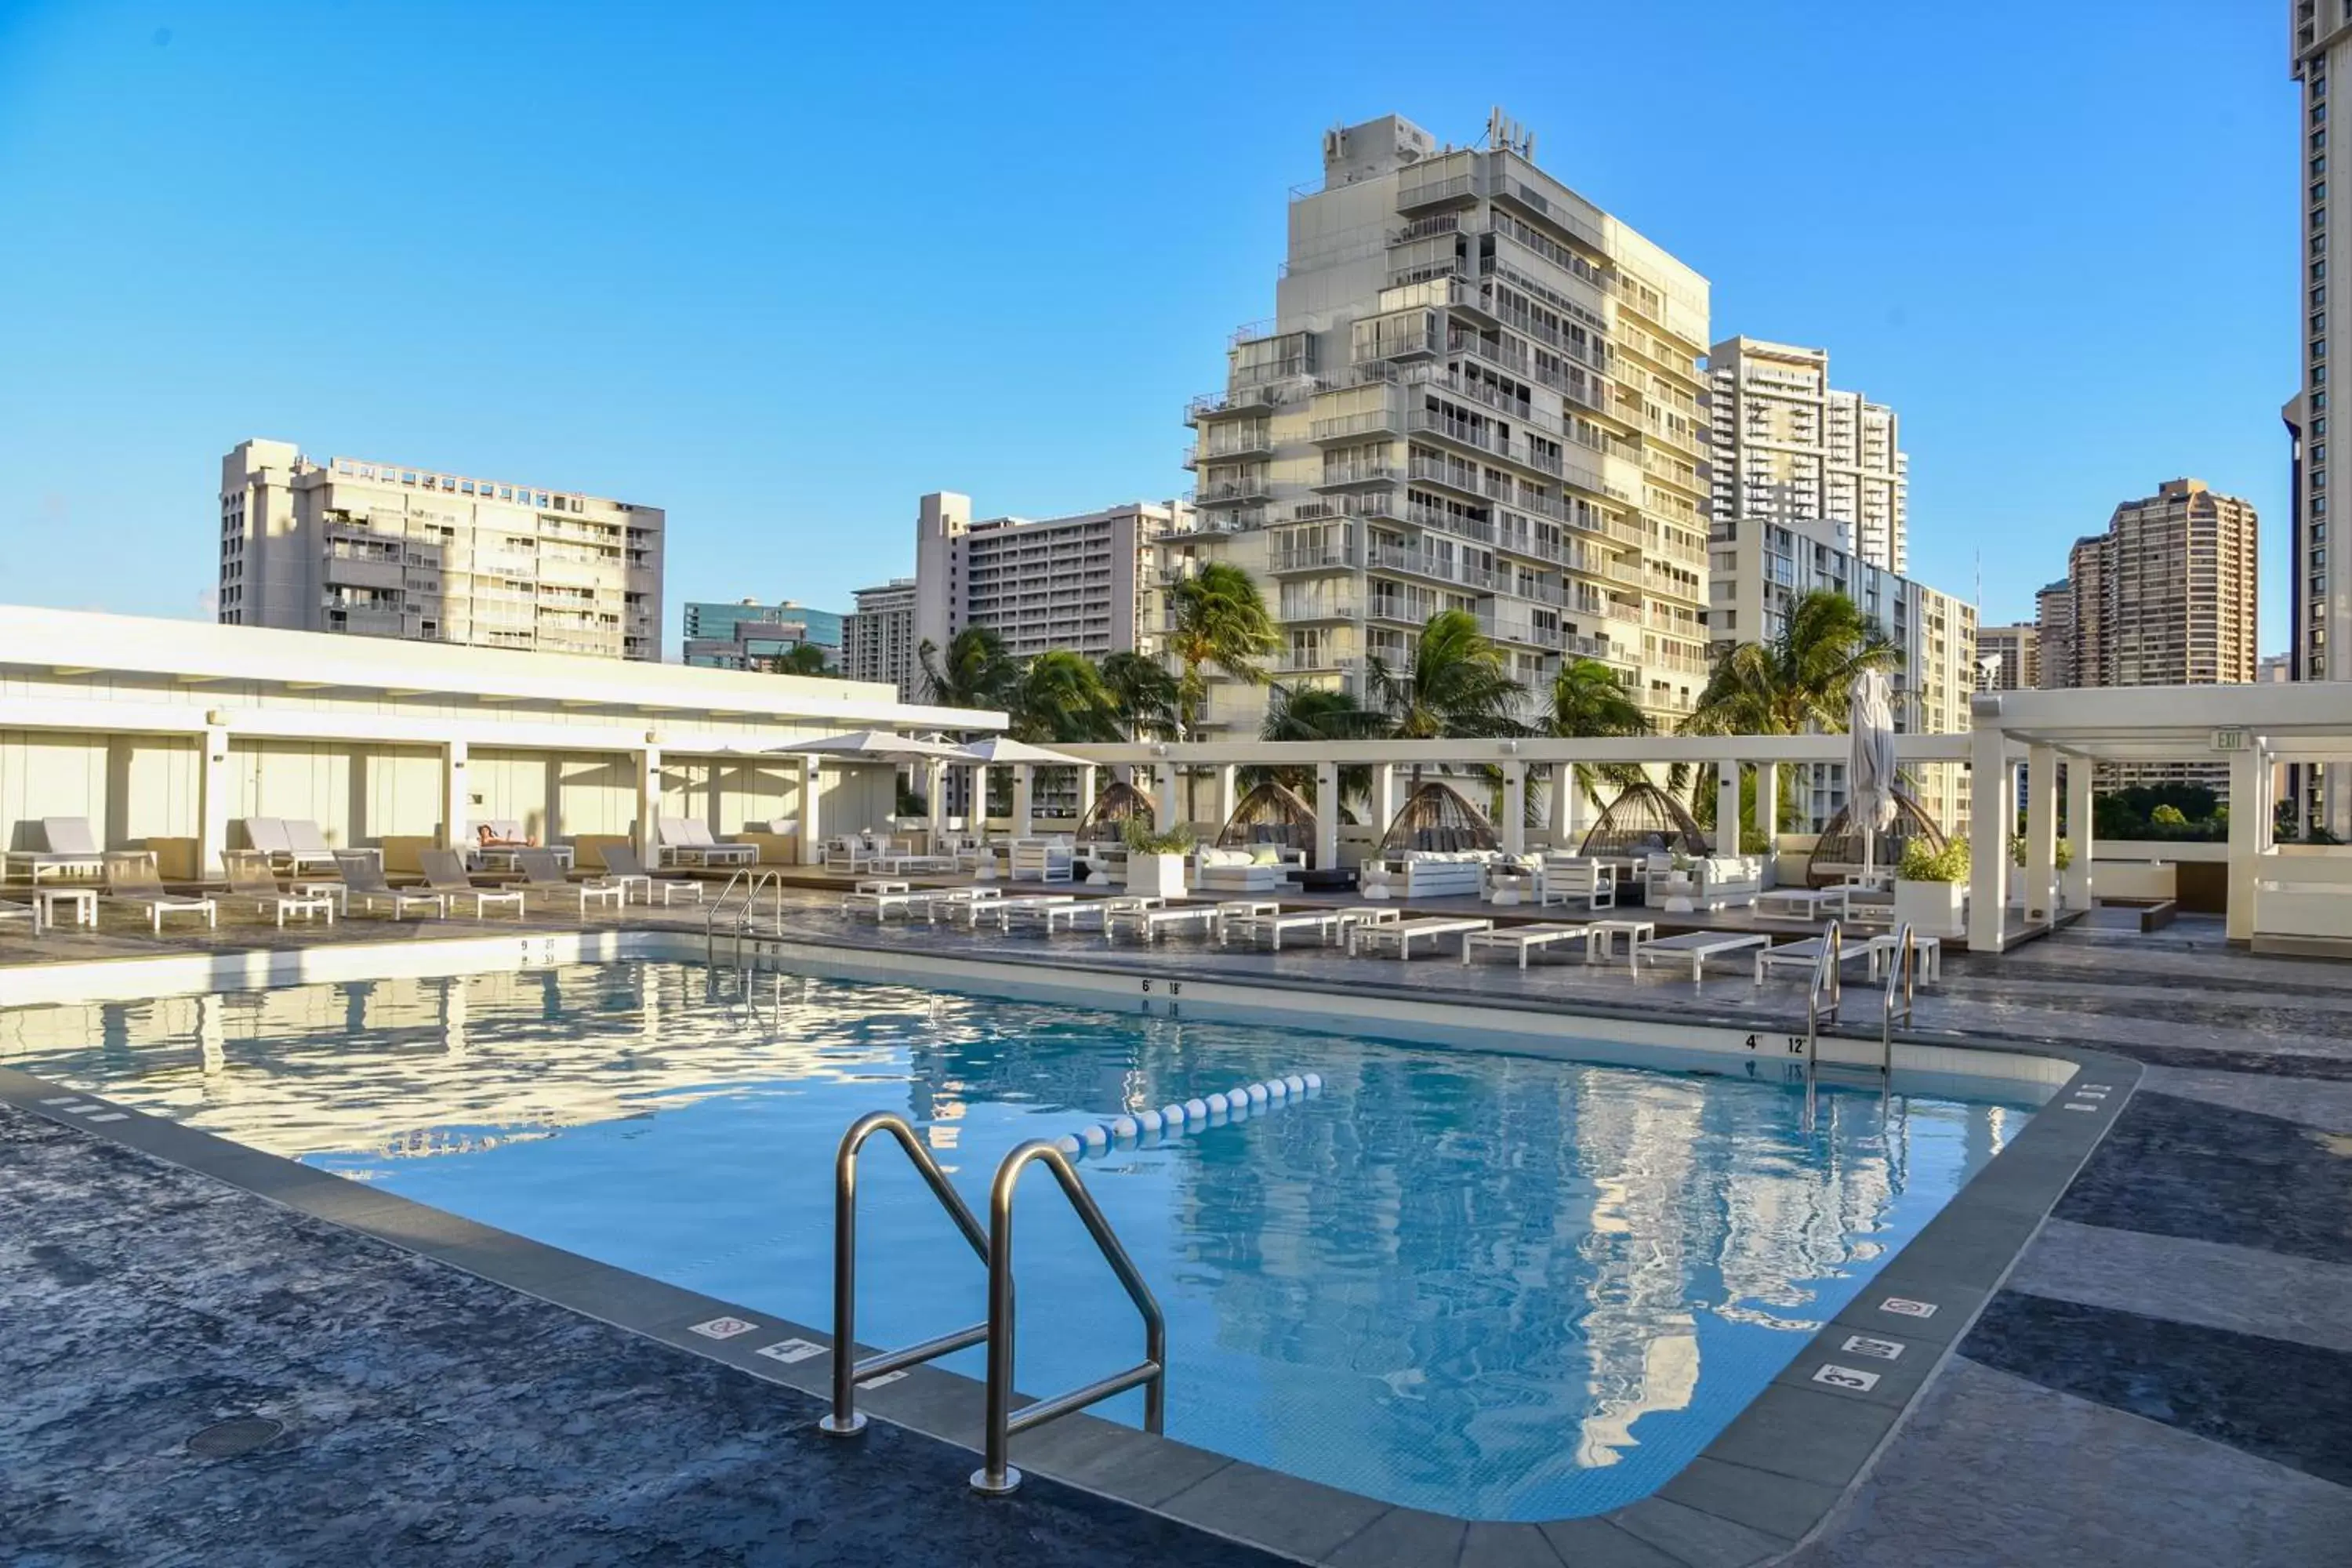 Swimming Pool in Ala Moana Hotel - Resort Fee Included